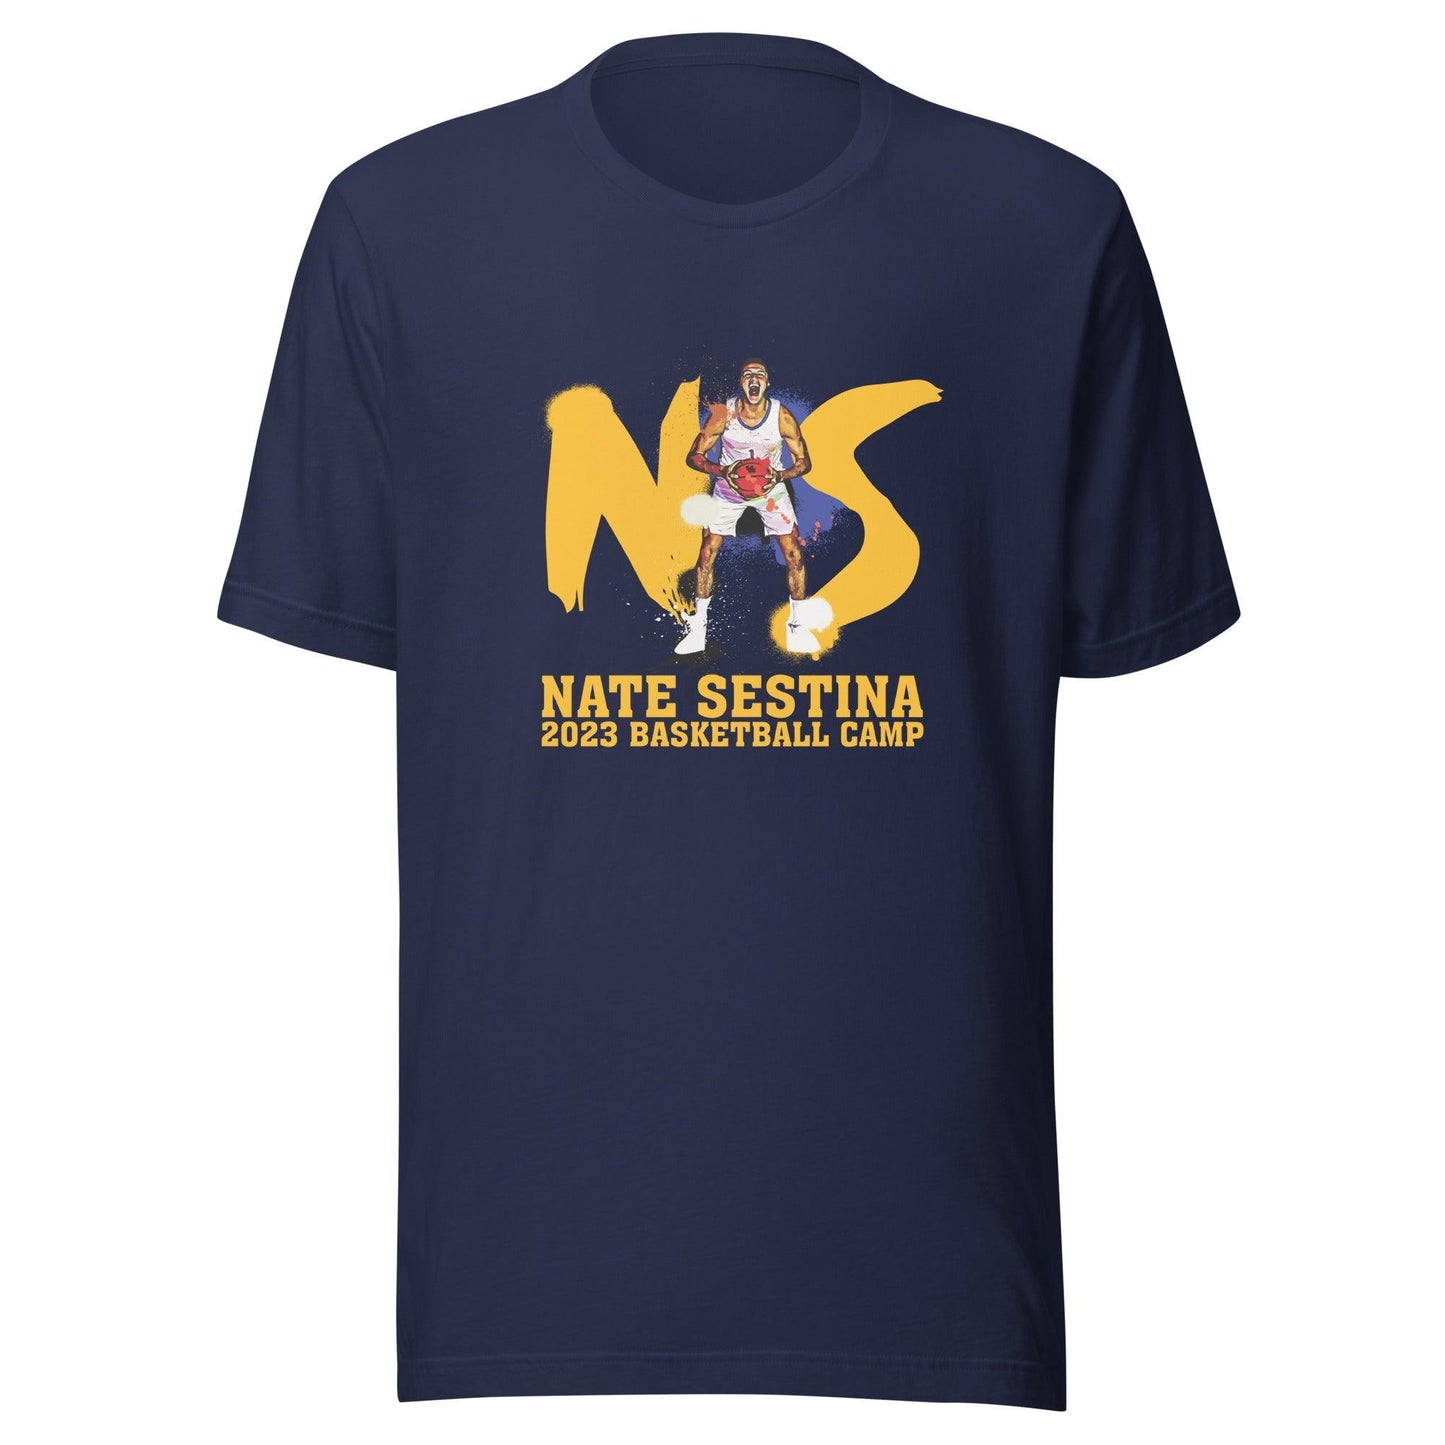 Nate Sestina "Youth Basketball Camp" Shirt - Fan Arch